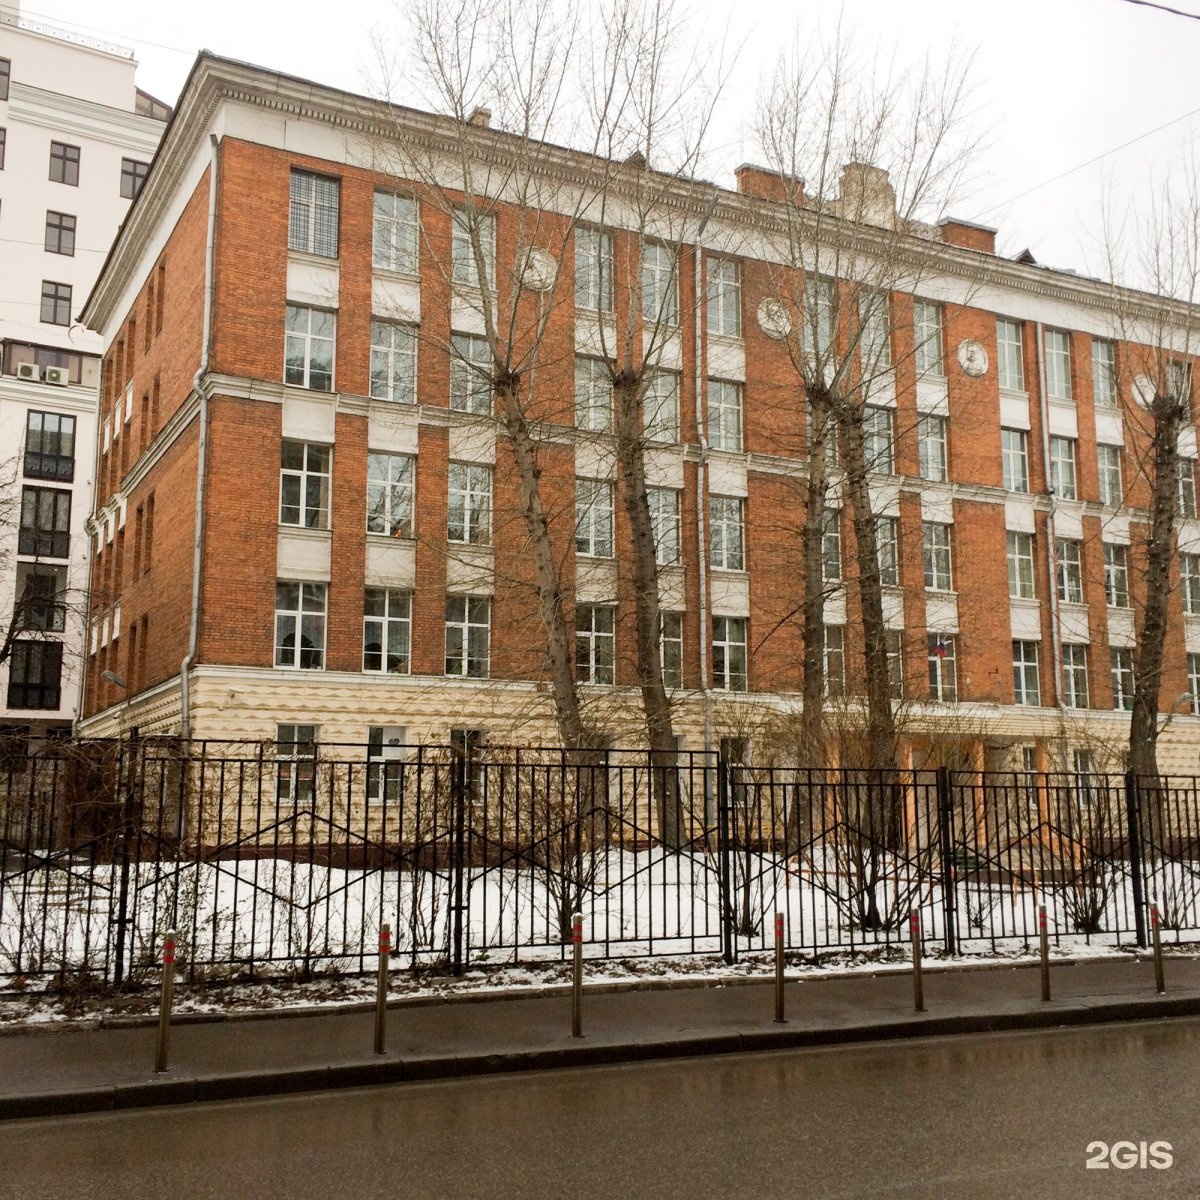 Сайт школы покровский квартал москва